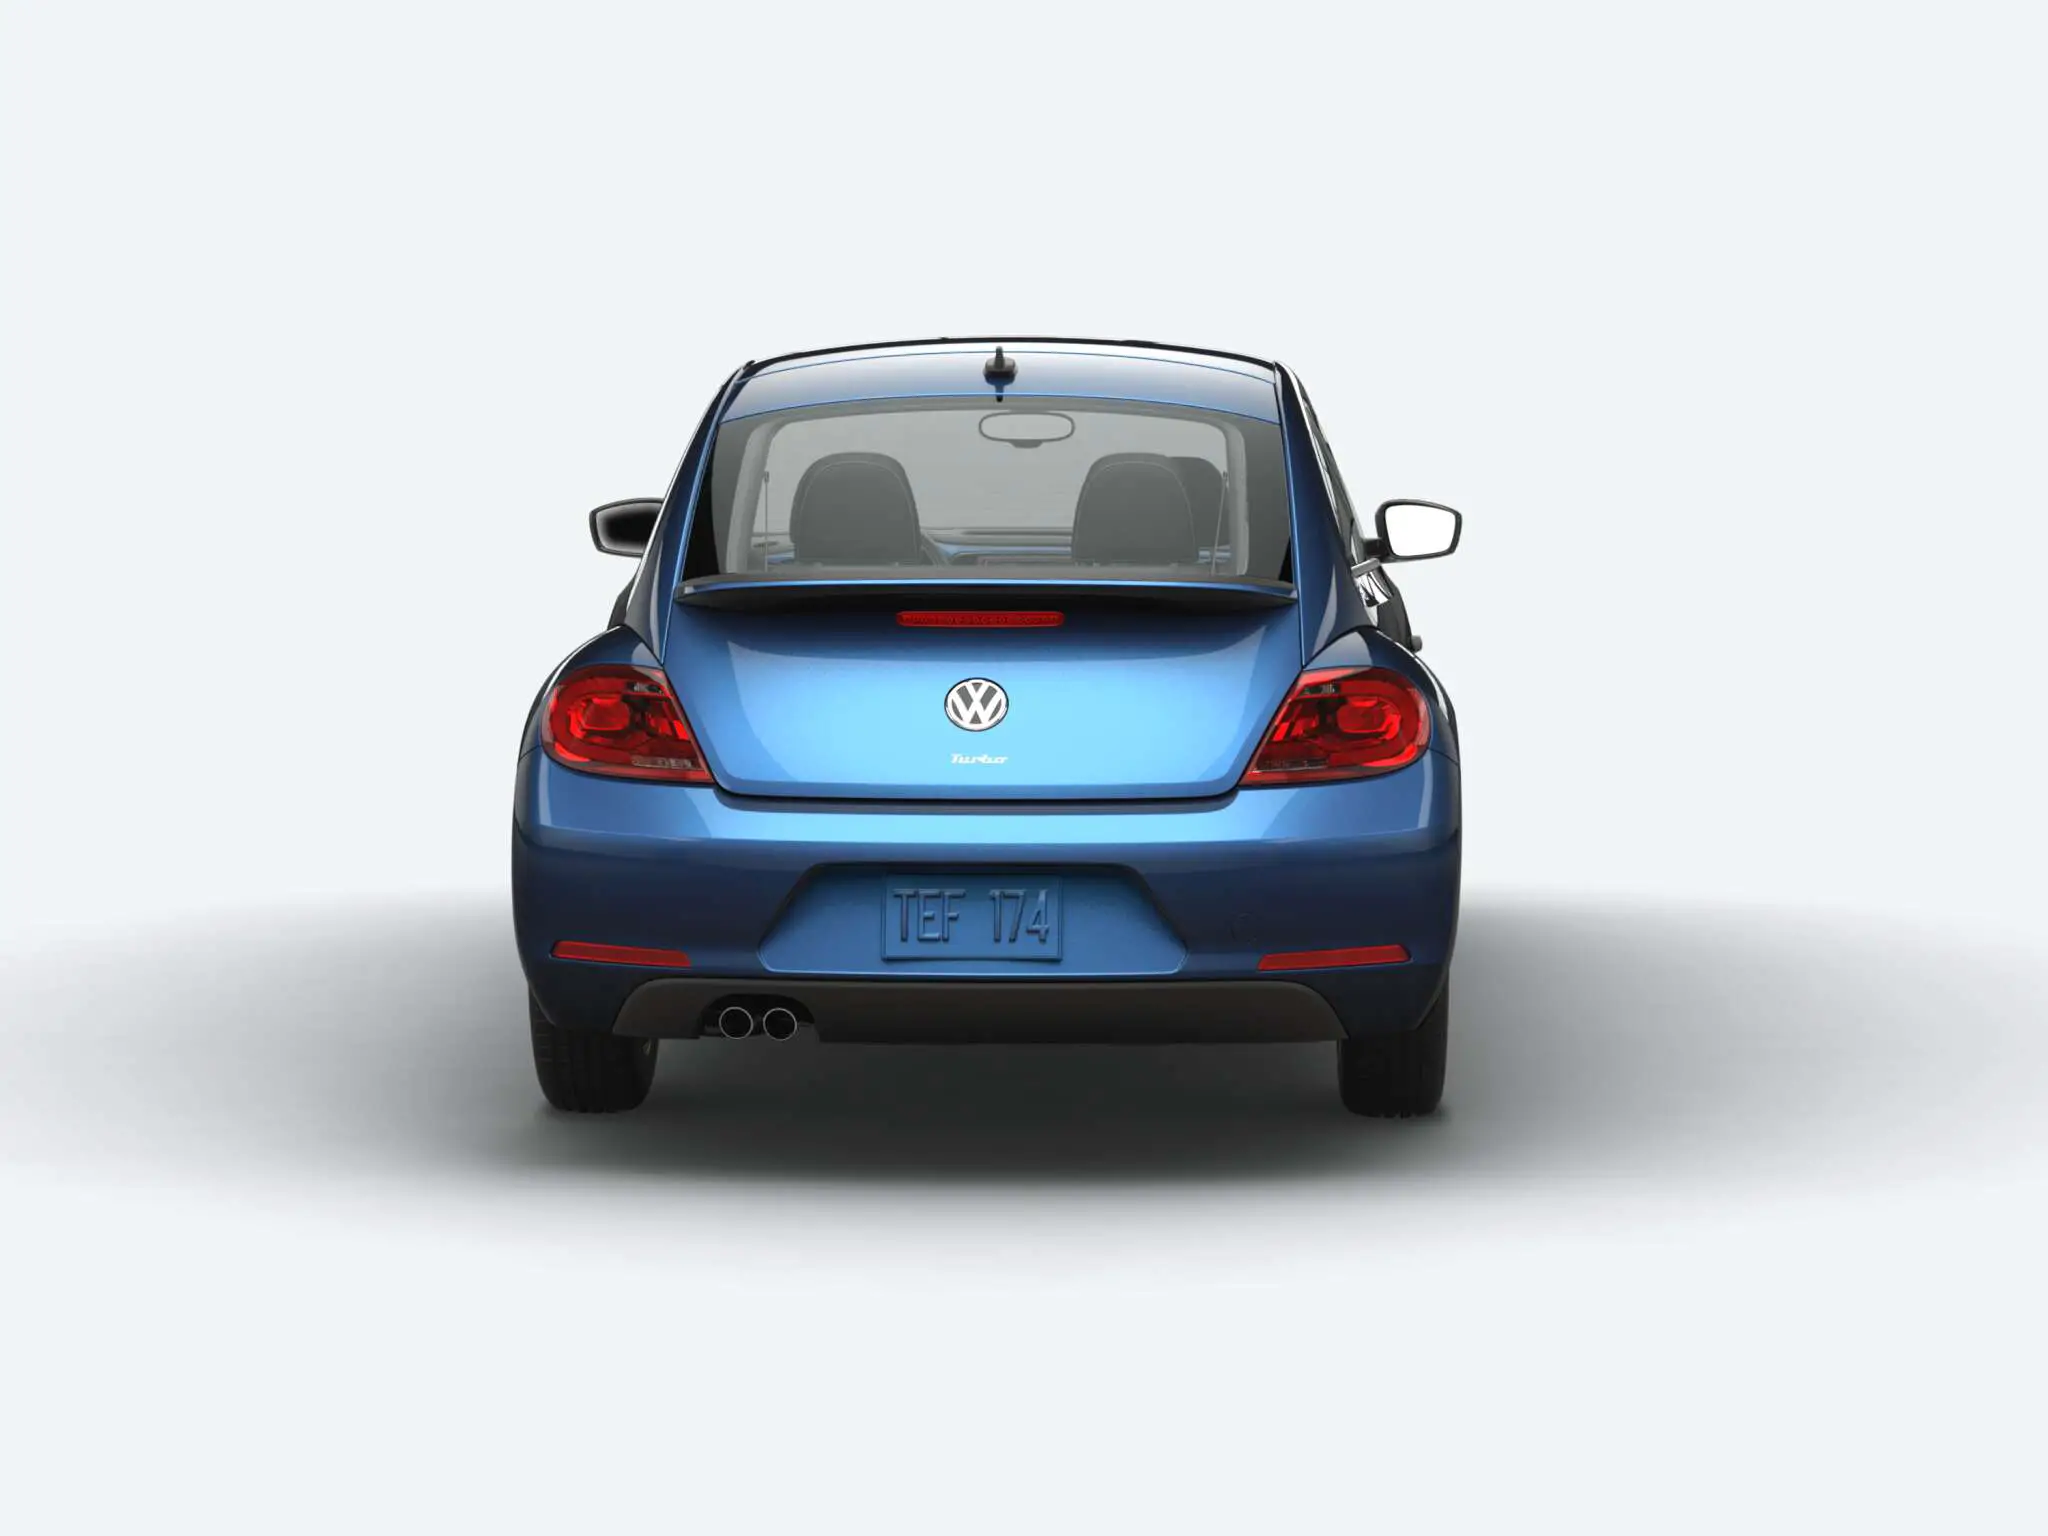 Volkswagen Beetle SE rear view